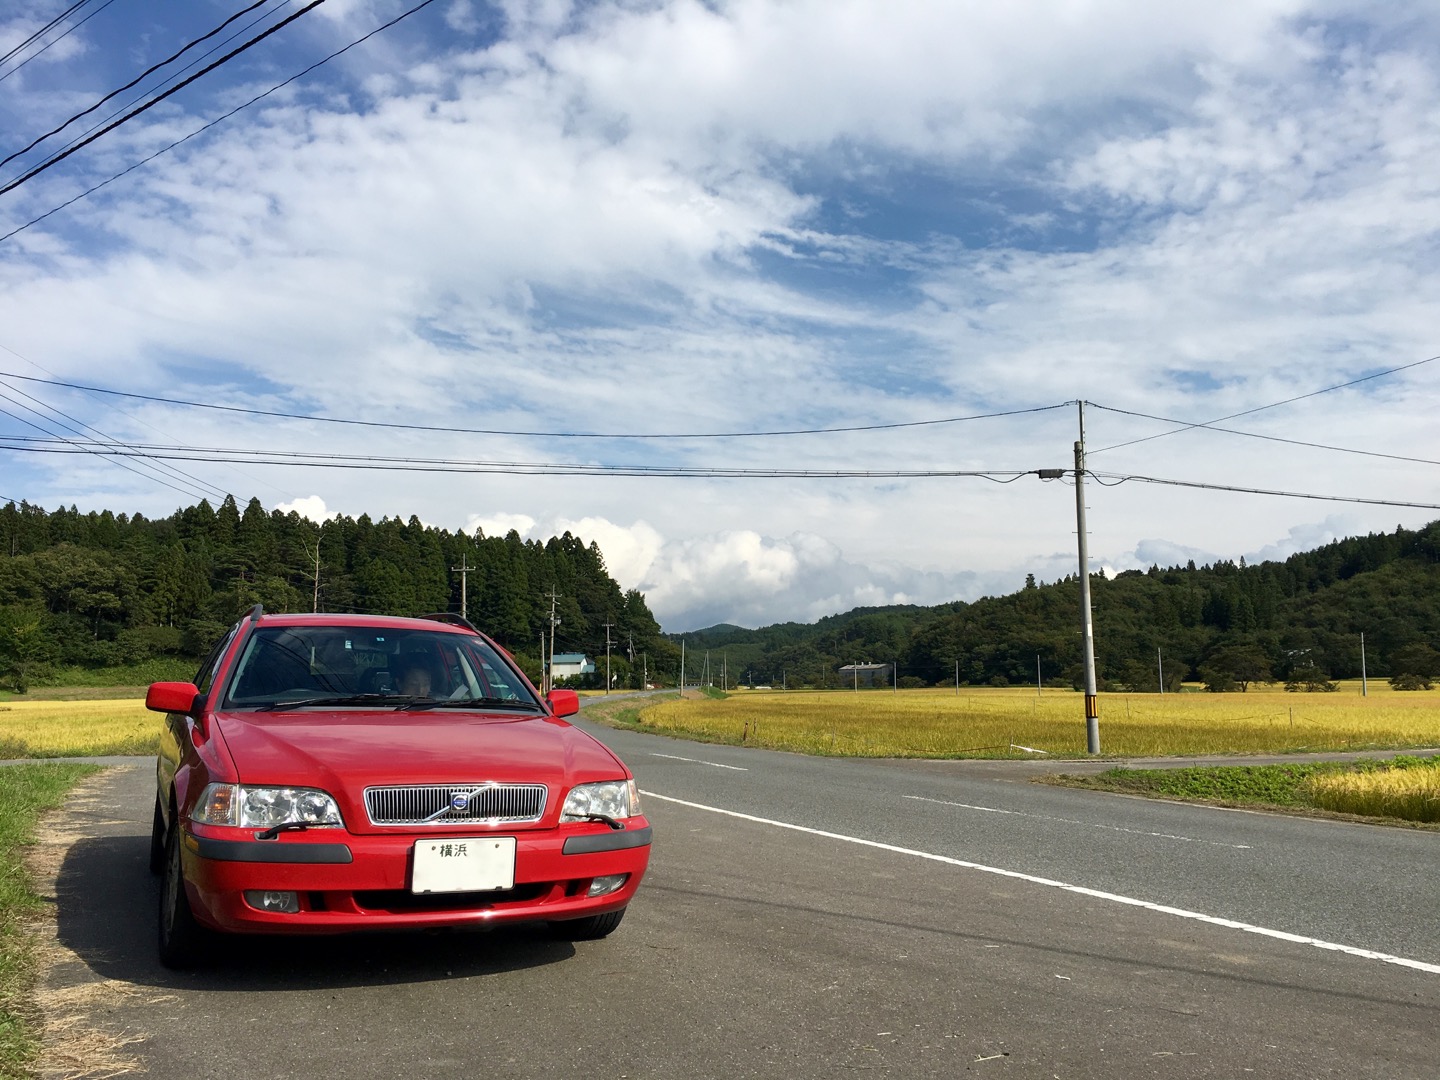 Fukushima pref. road 358